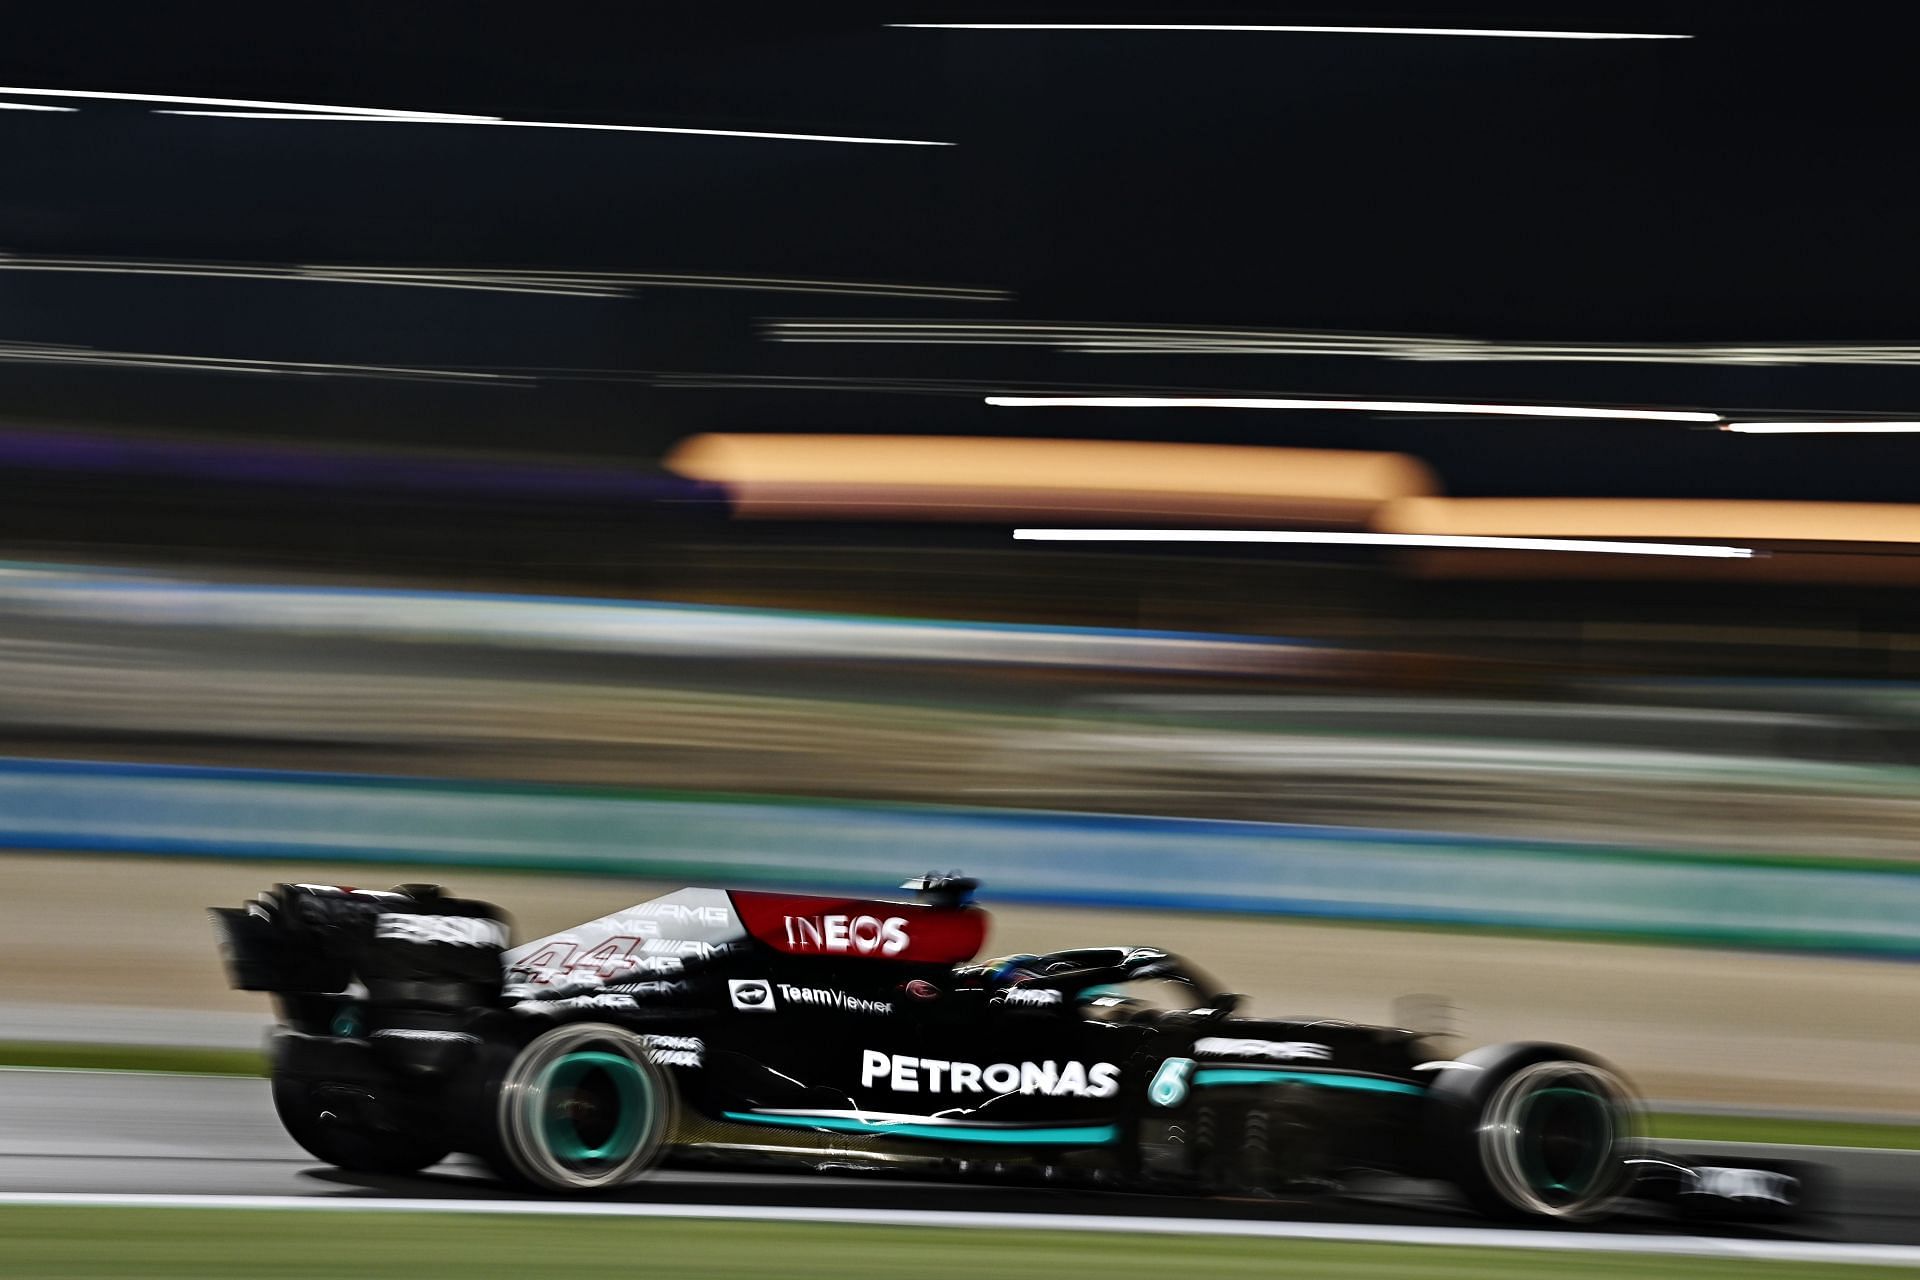 Lewis Hamilton on track during the F1 Grand Prix of Qatar.